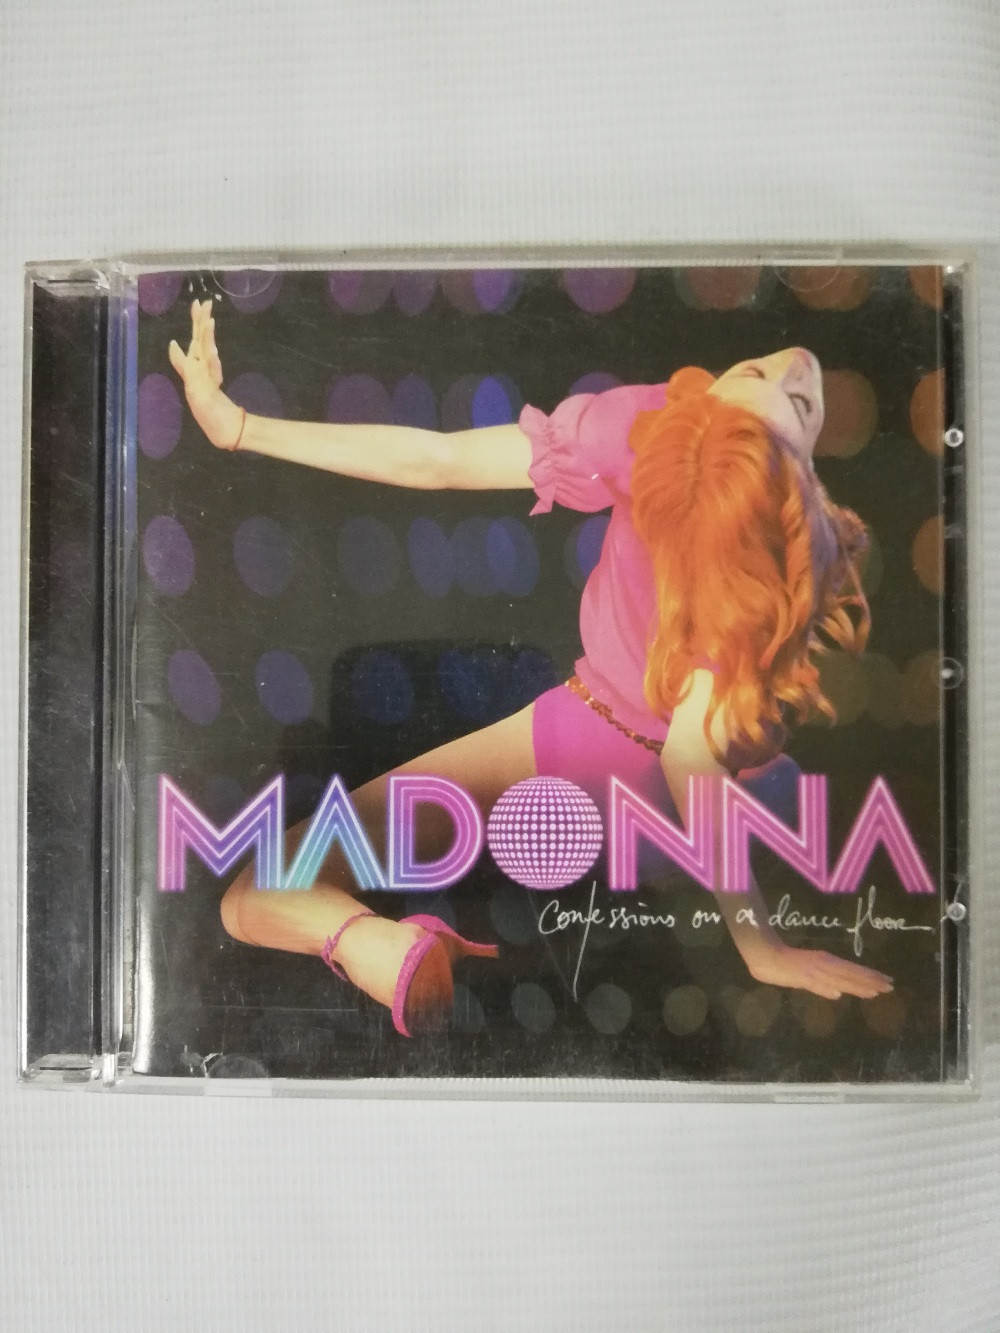 Imagen CD MADONNA - CONFESSIONS ON A DANCE FLOOR 1